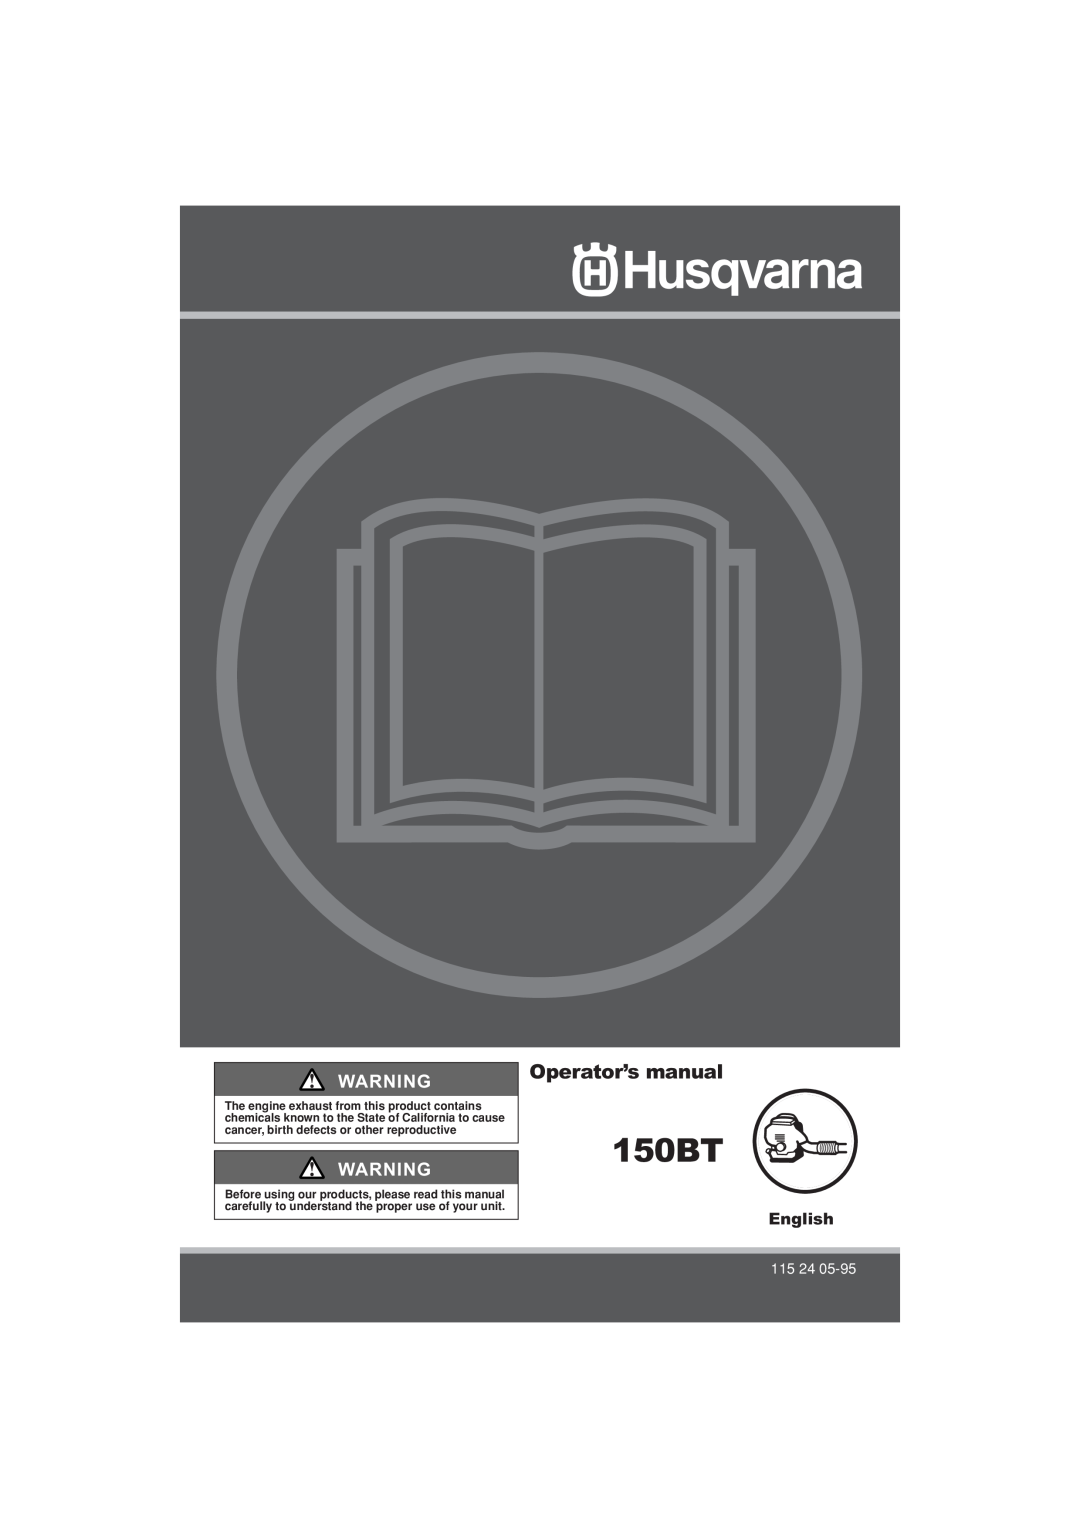 Husqvarna 115 24 05-95 manual 150BT, Operator’s manual, English 